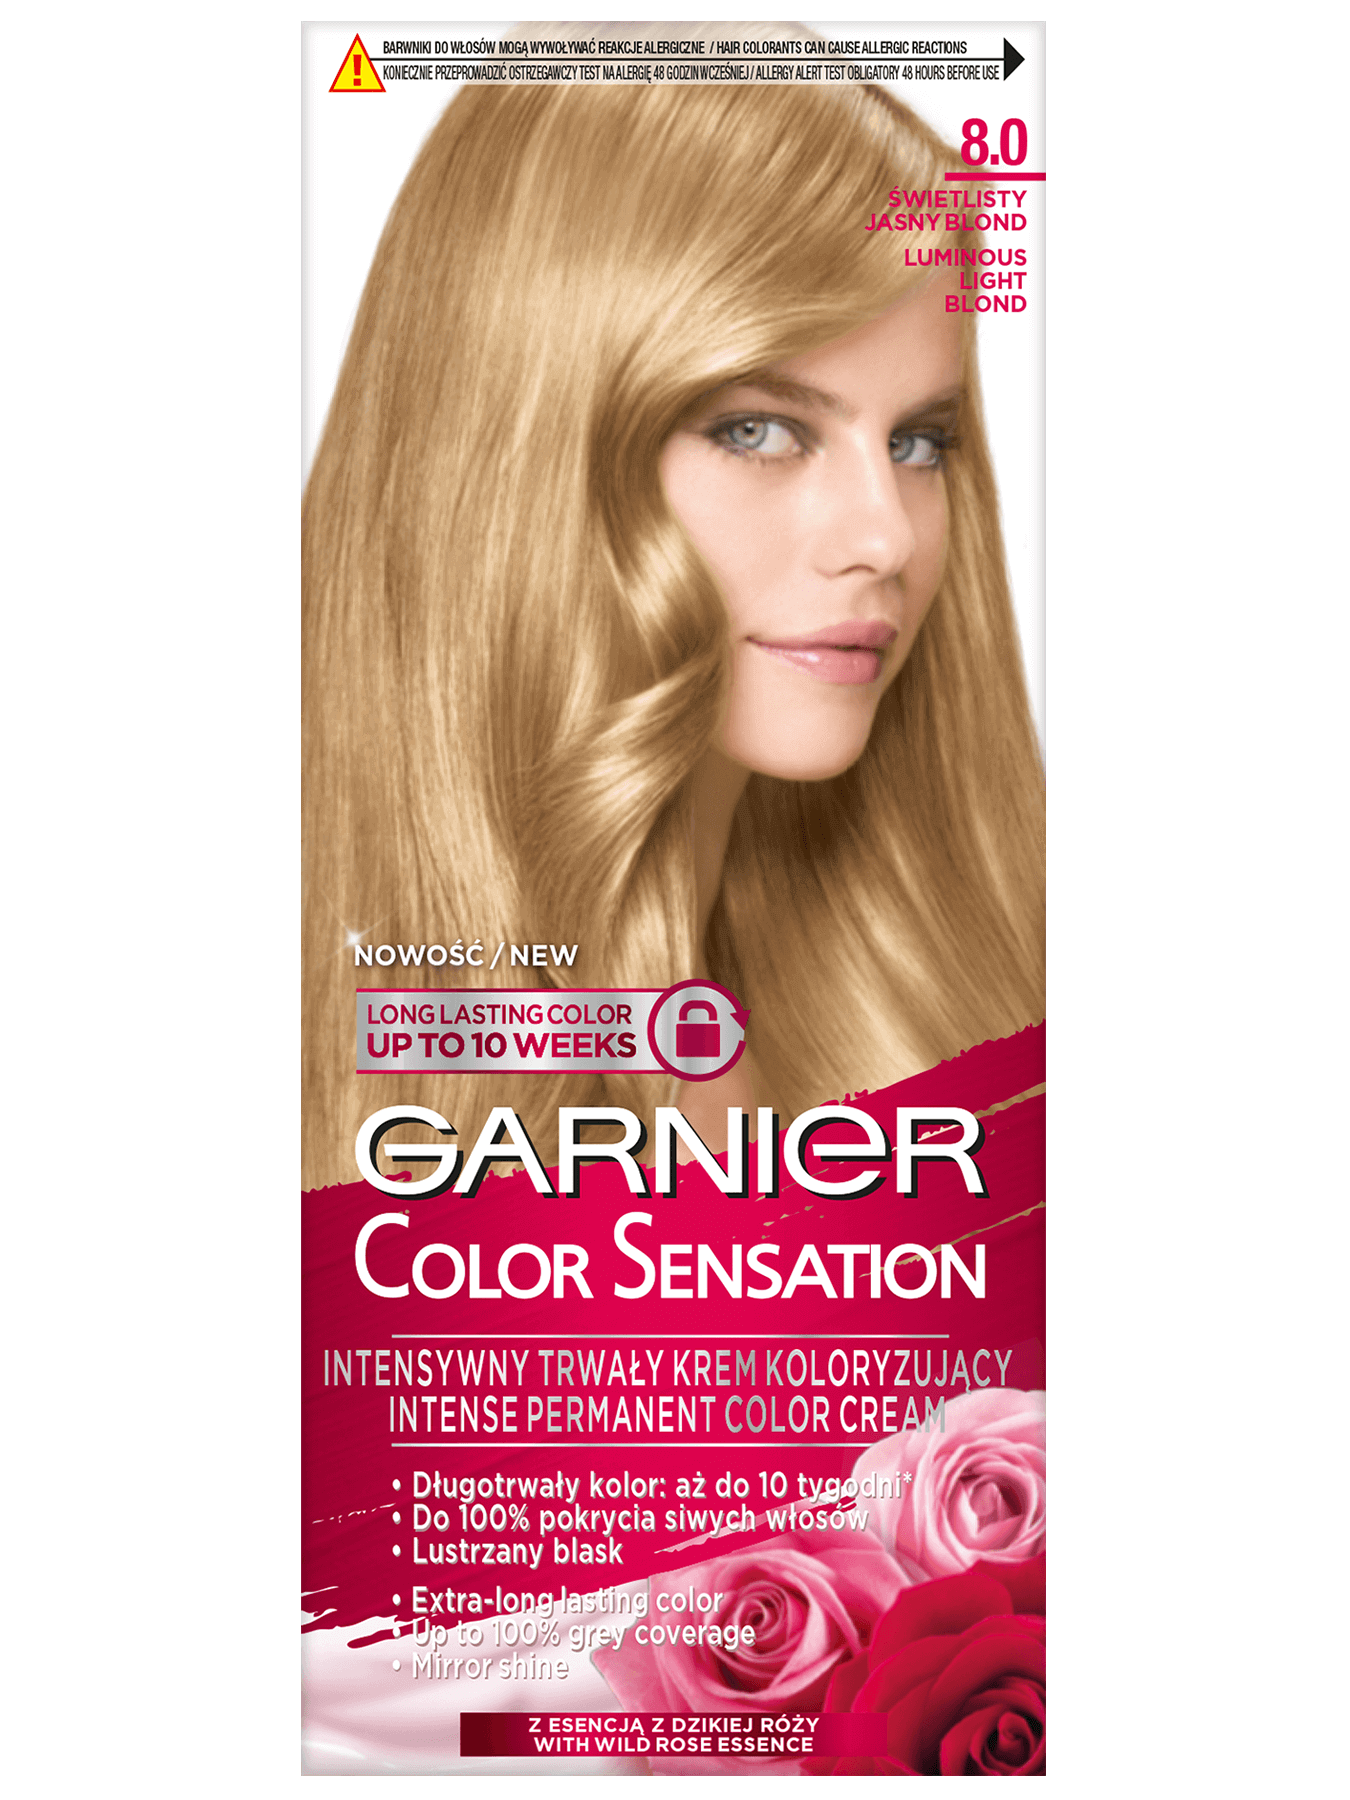 garnier color sensation 8 jasny blond 1530x1800